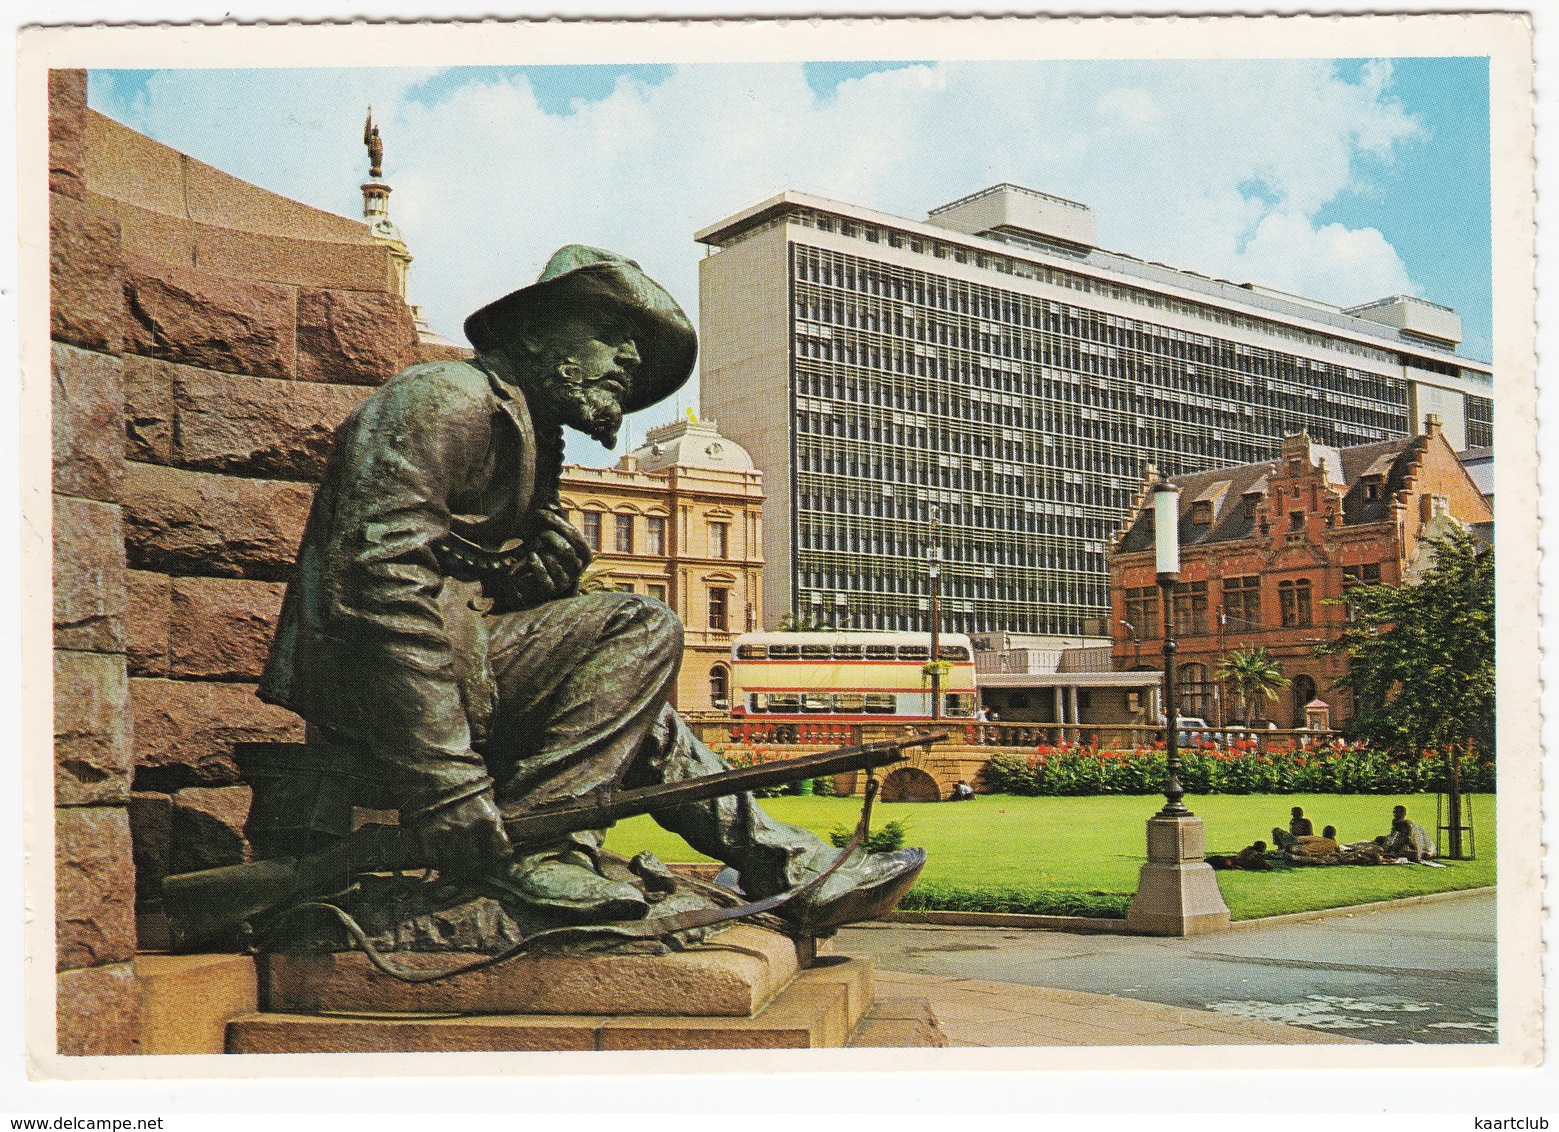 Pretoria: DOUBLE DECK BUS - Church Square - Paul Kruger Monument (bronze) - (South Africa) - Sudáfrica